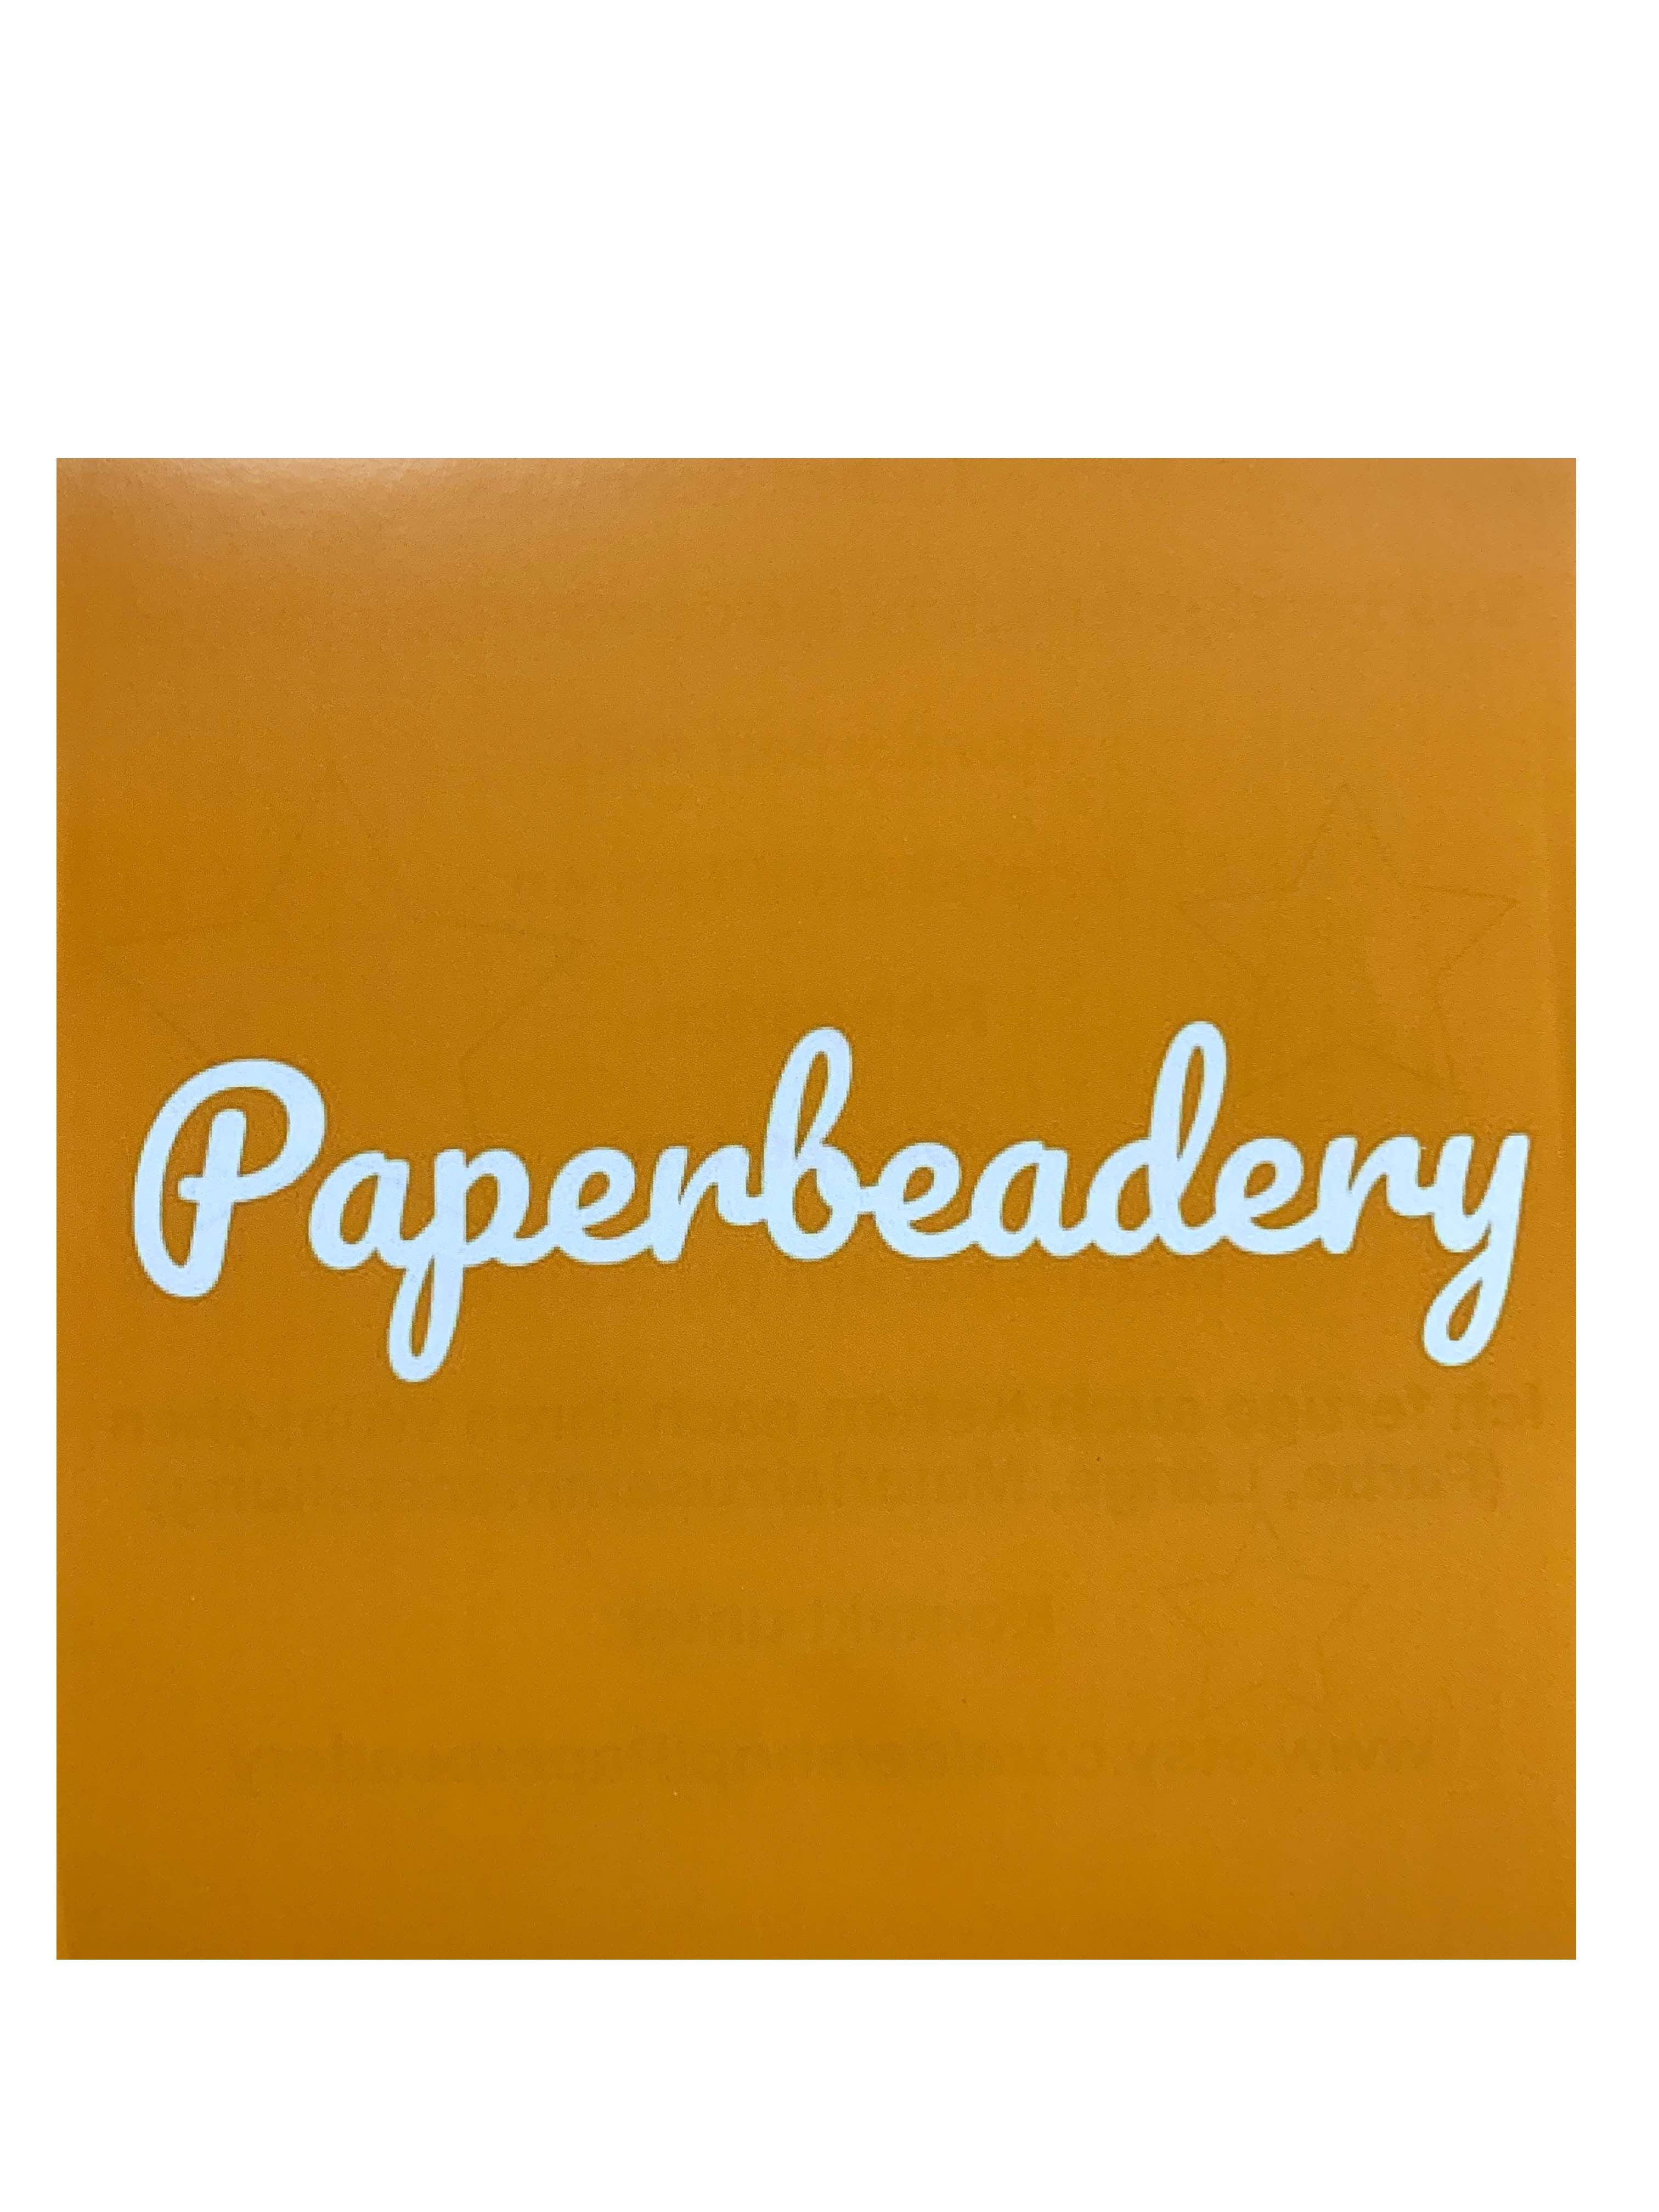 Paperbeadery